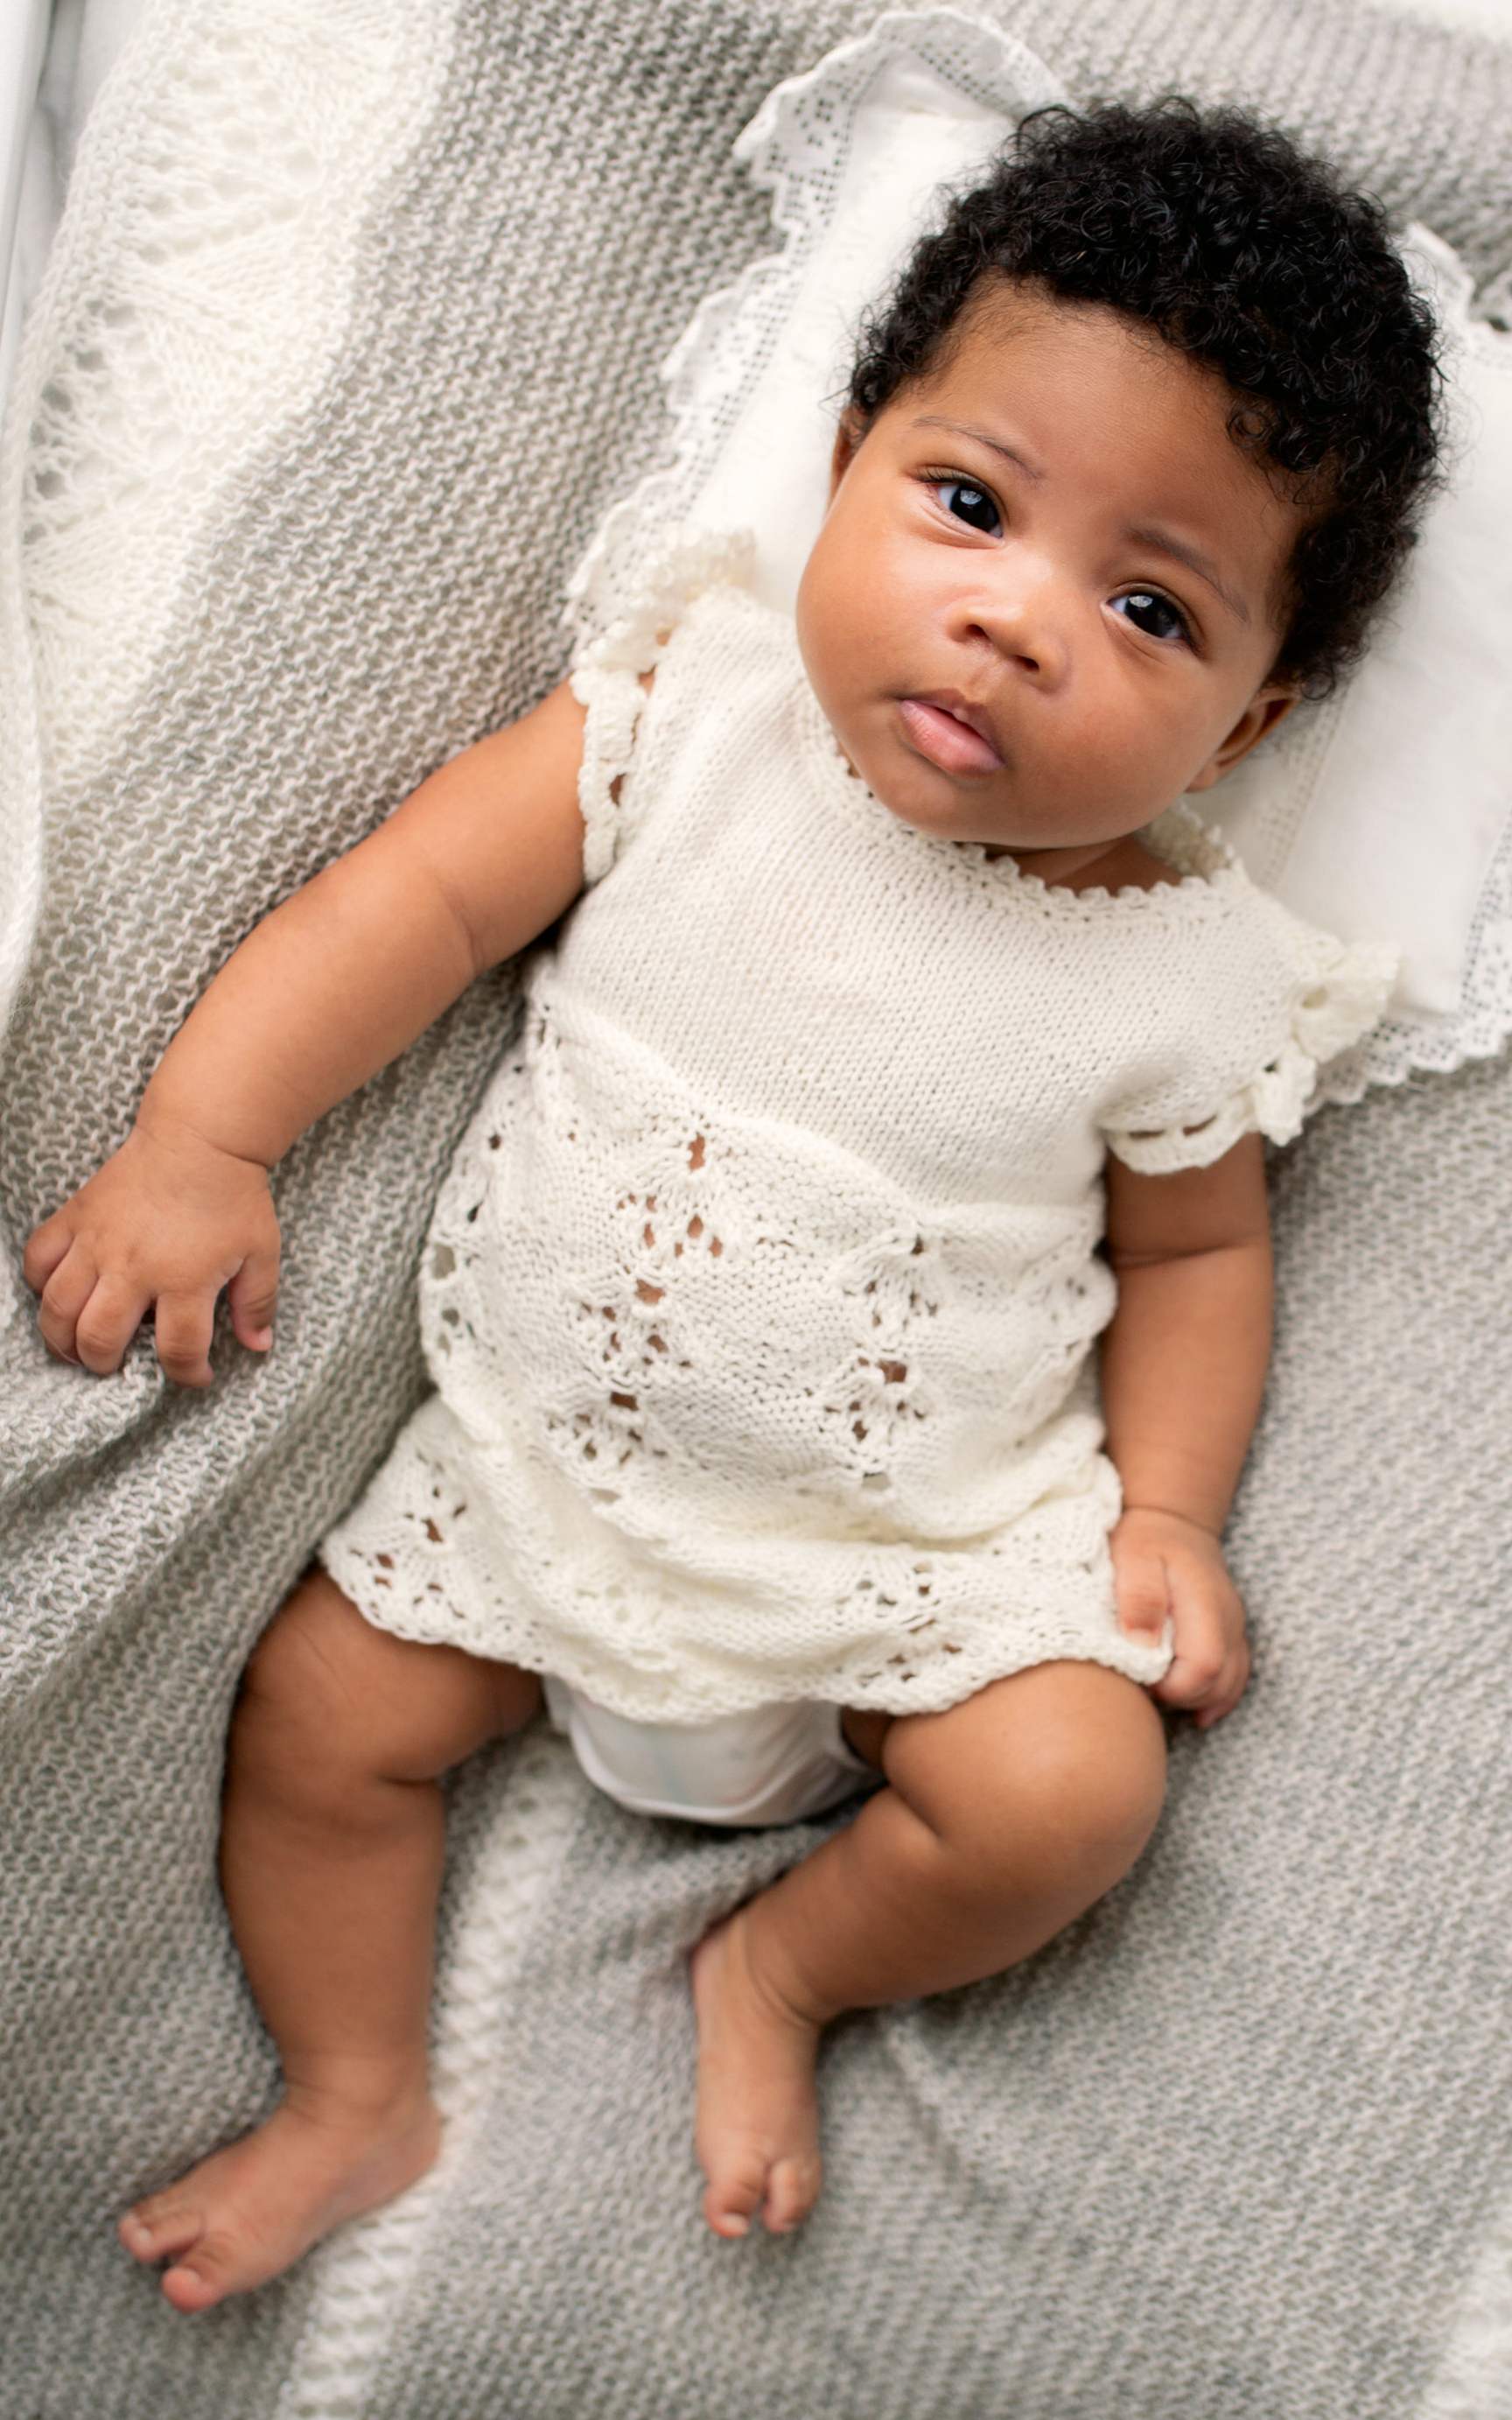 LANA GROSSA Strickset Baby Kleid mit Ajourmuster - Strickset